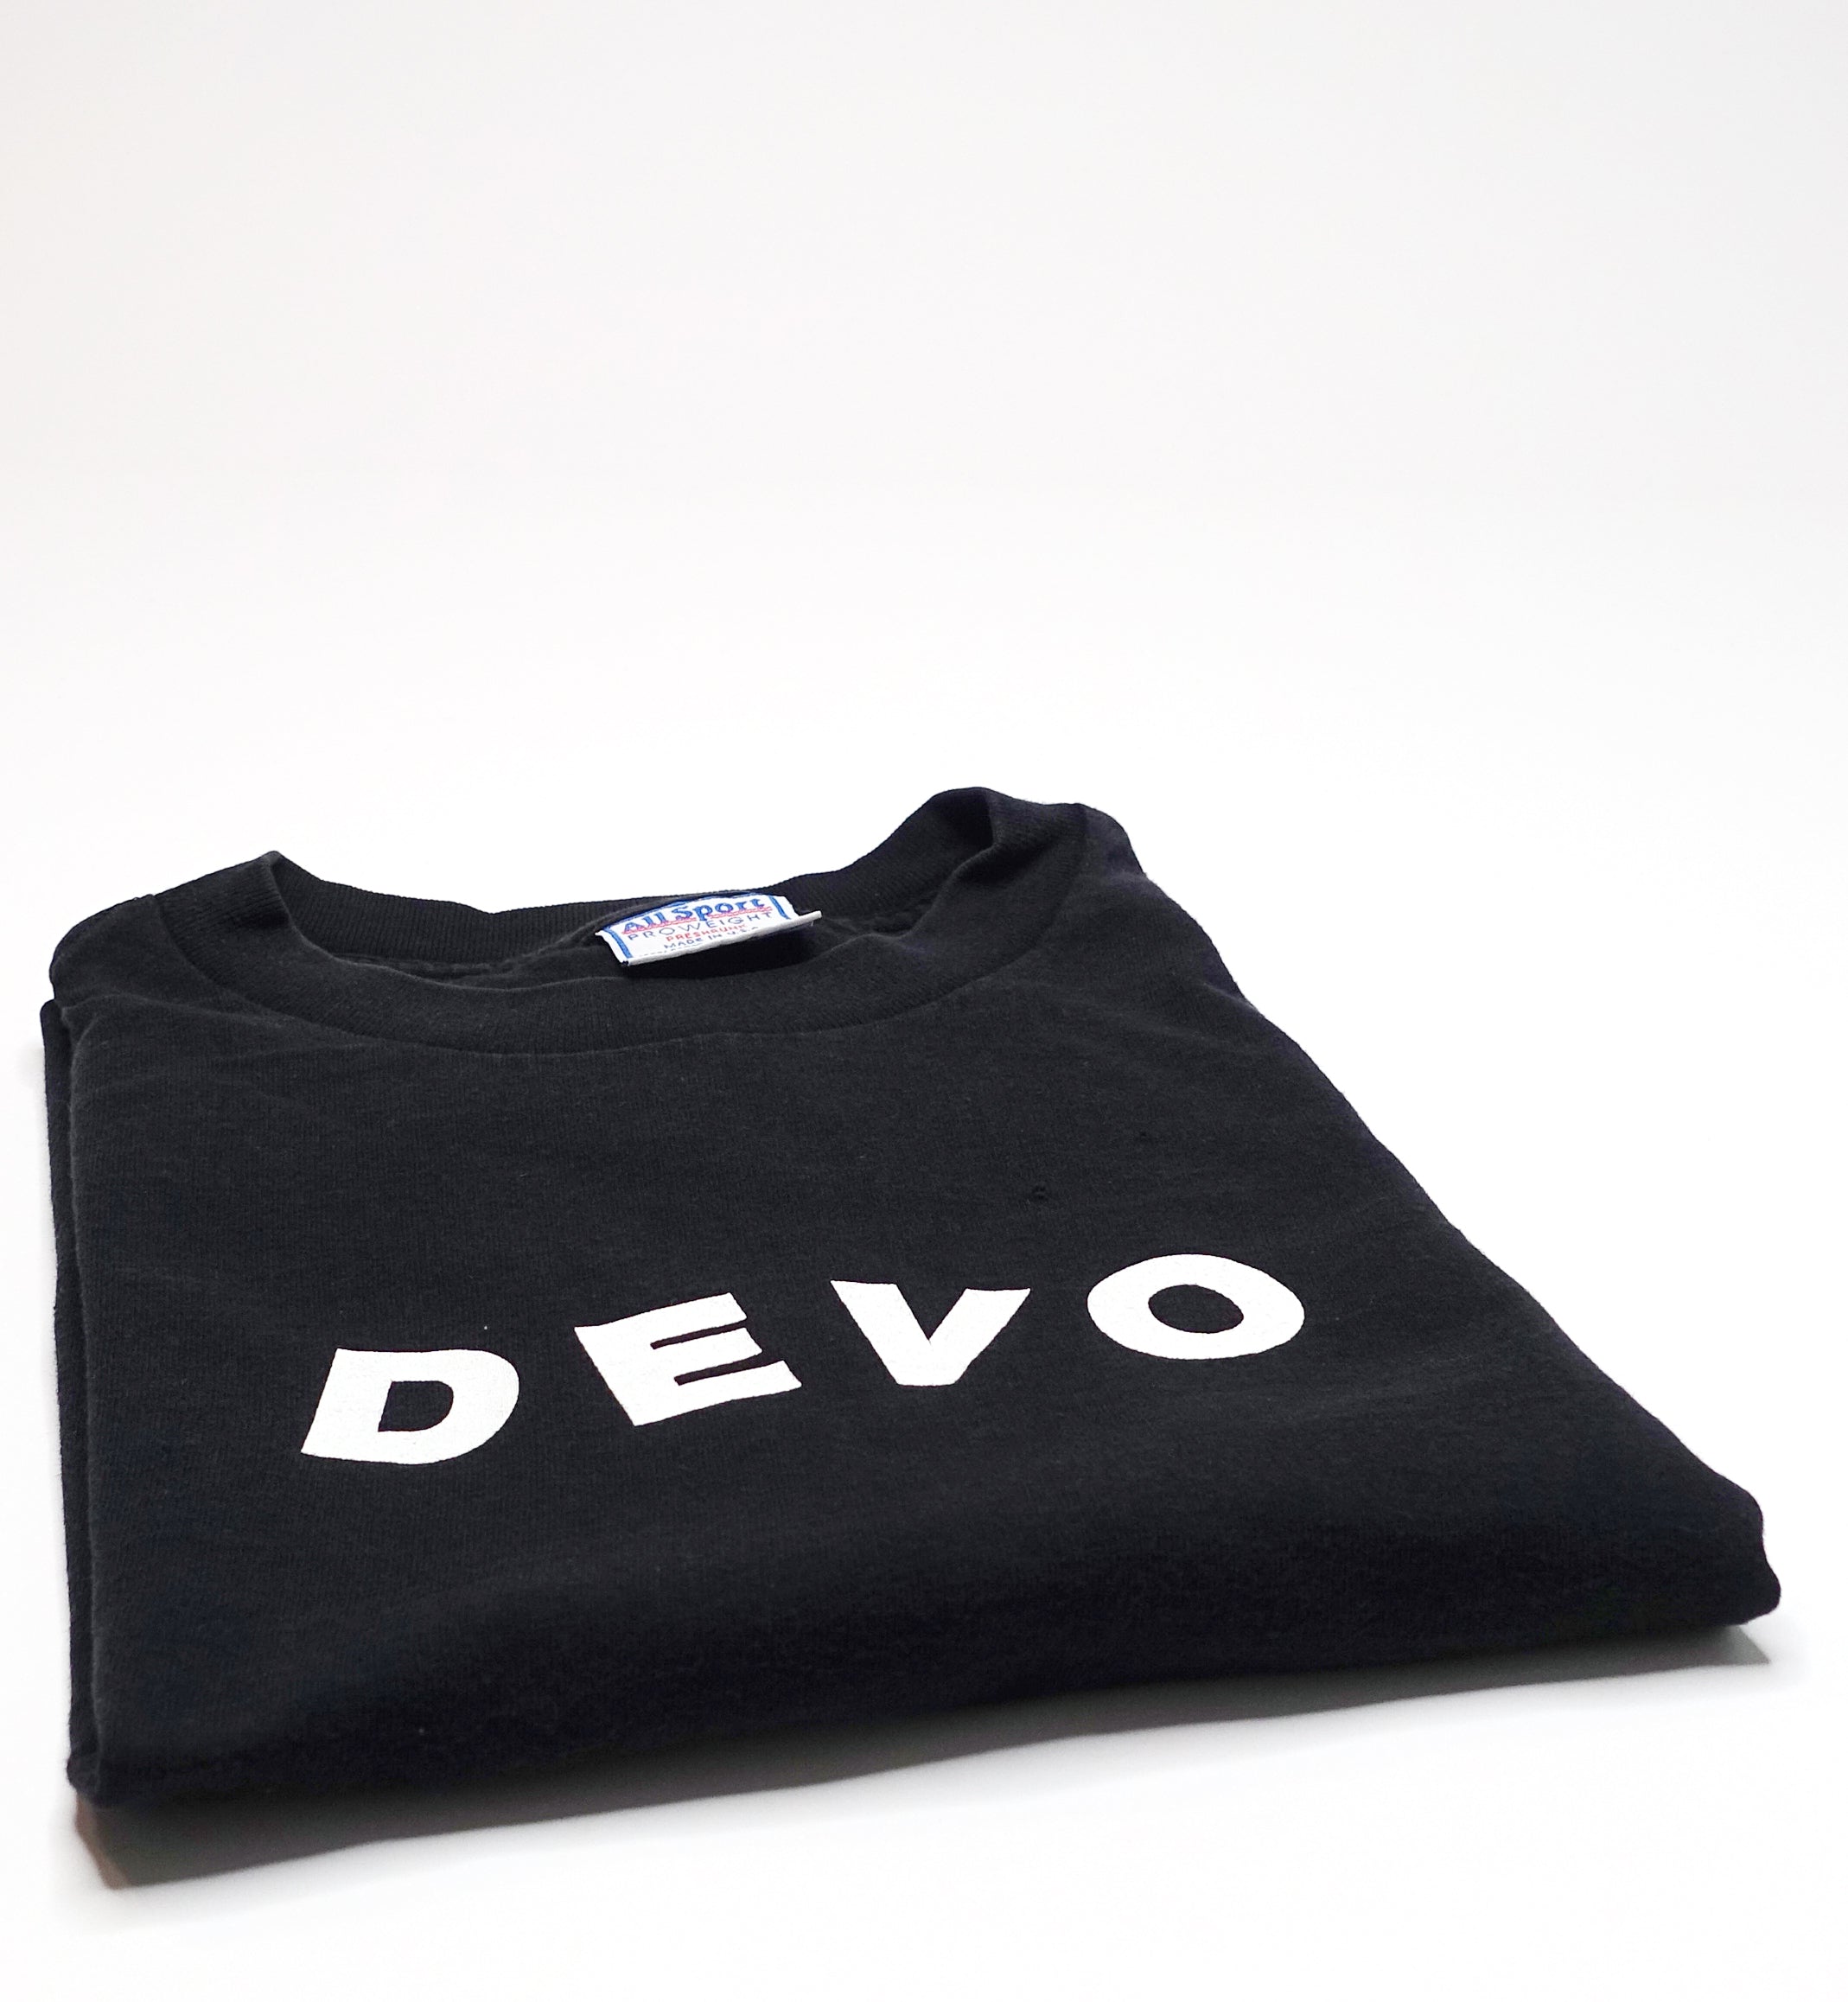 Devo – Booji Boy 90's Tour Shirt Size Medium